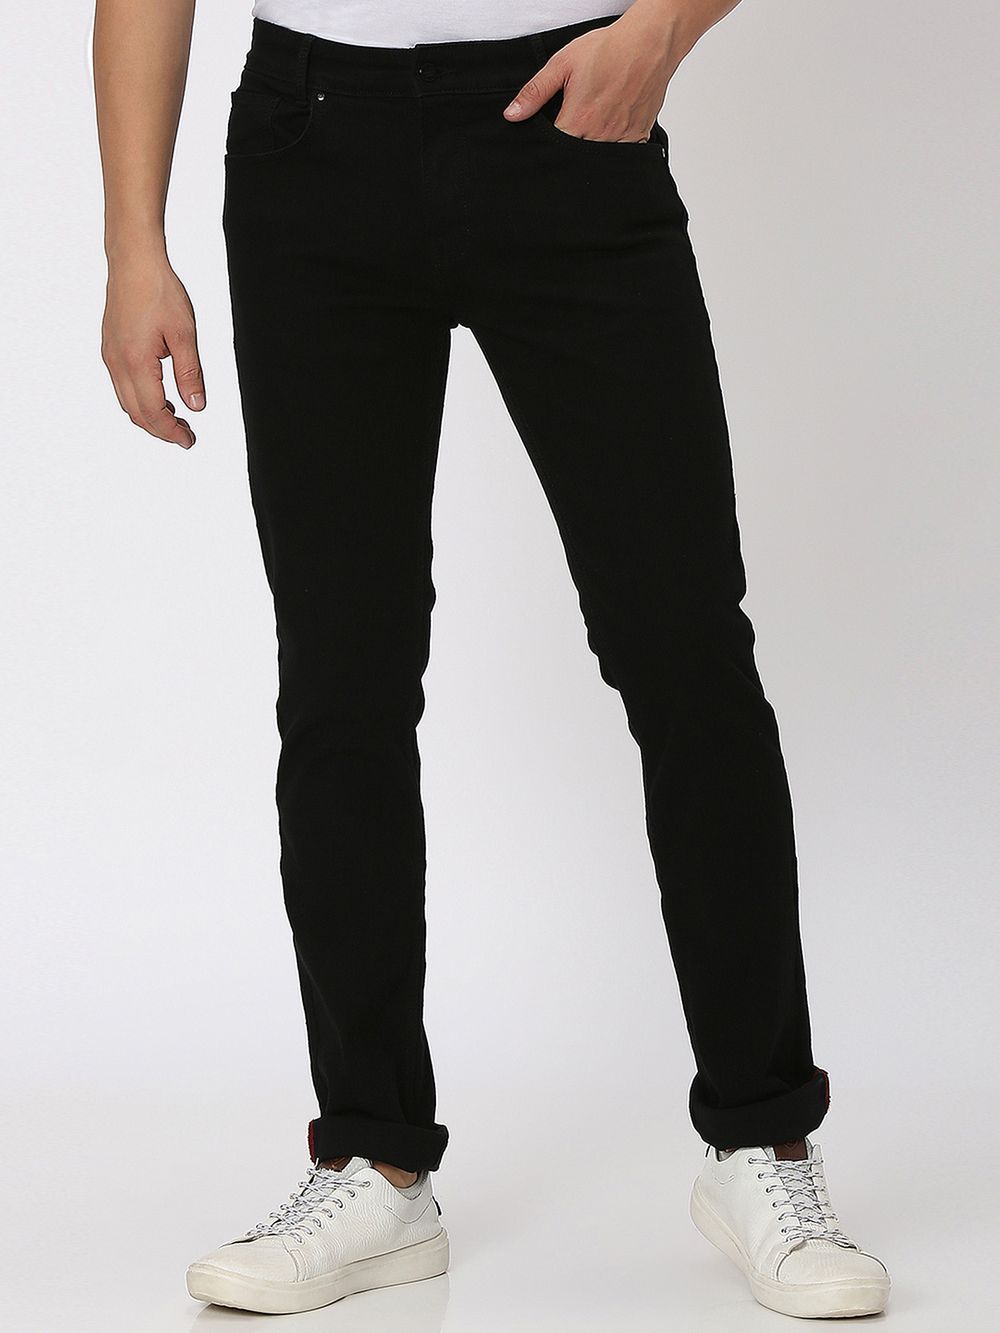 Jet Black Narrow Fit Originals Stretch Jeans